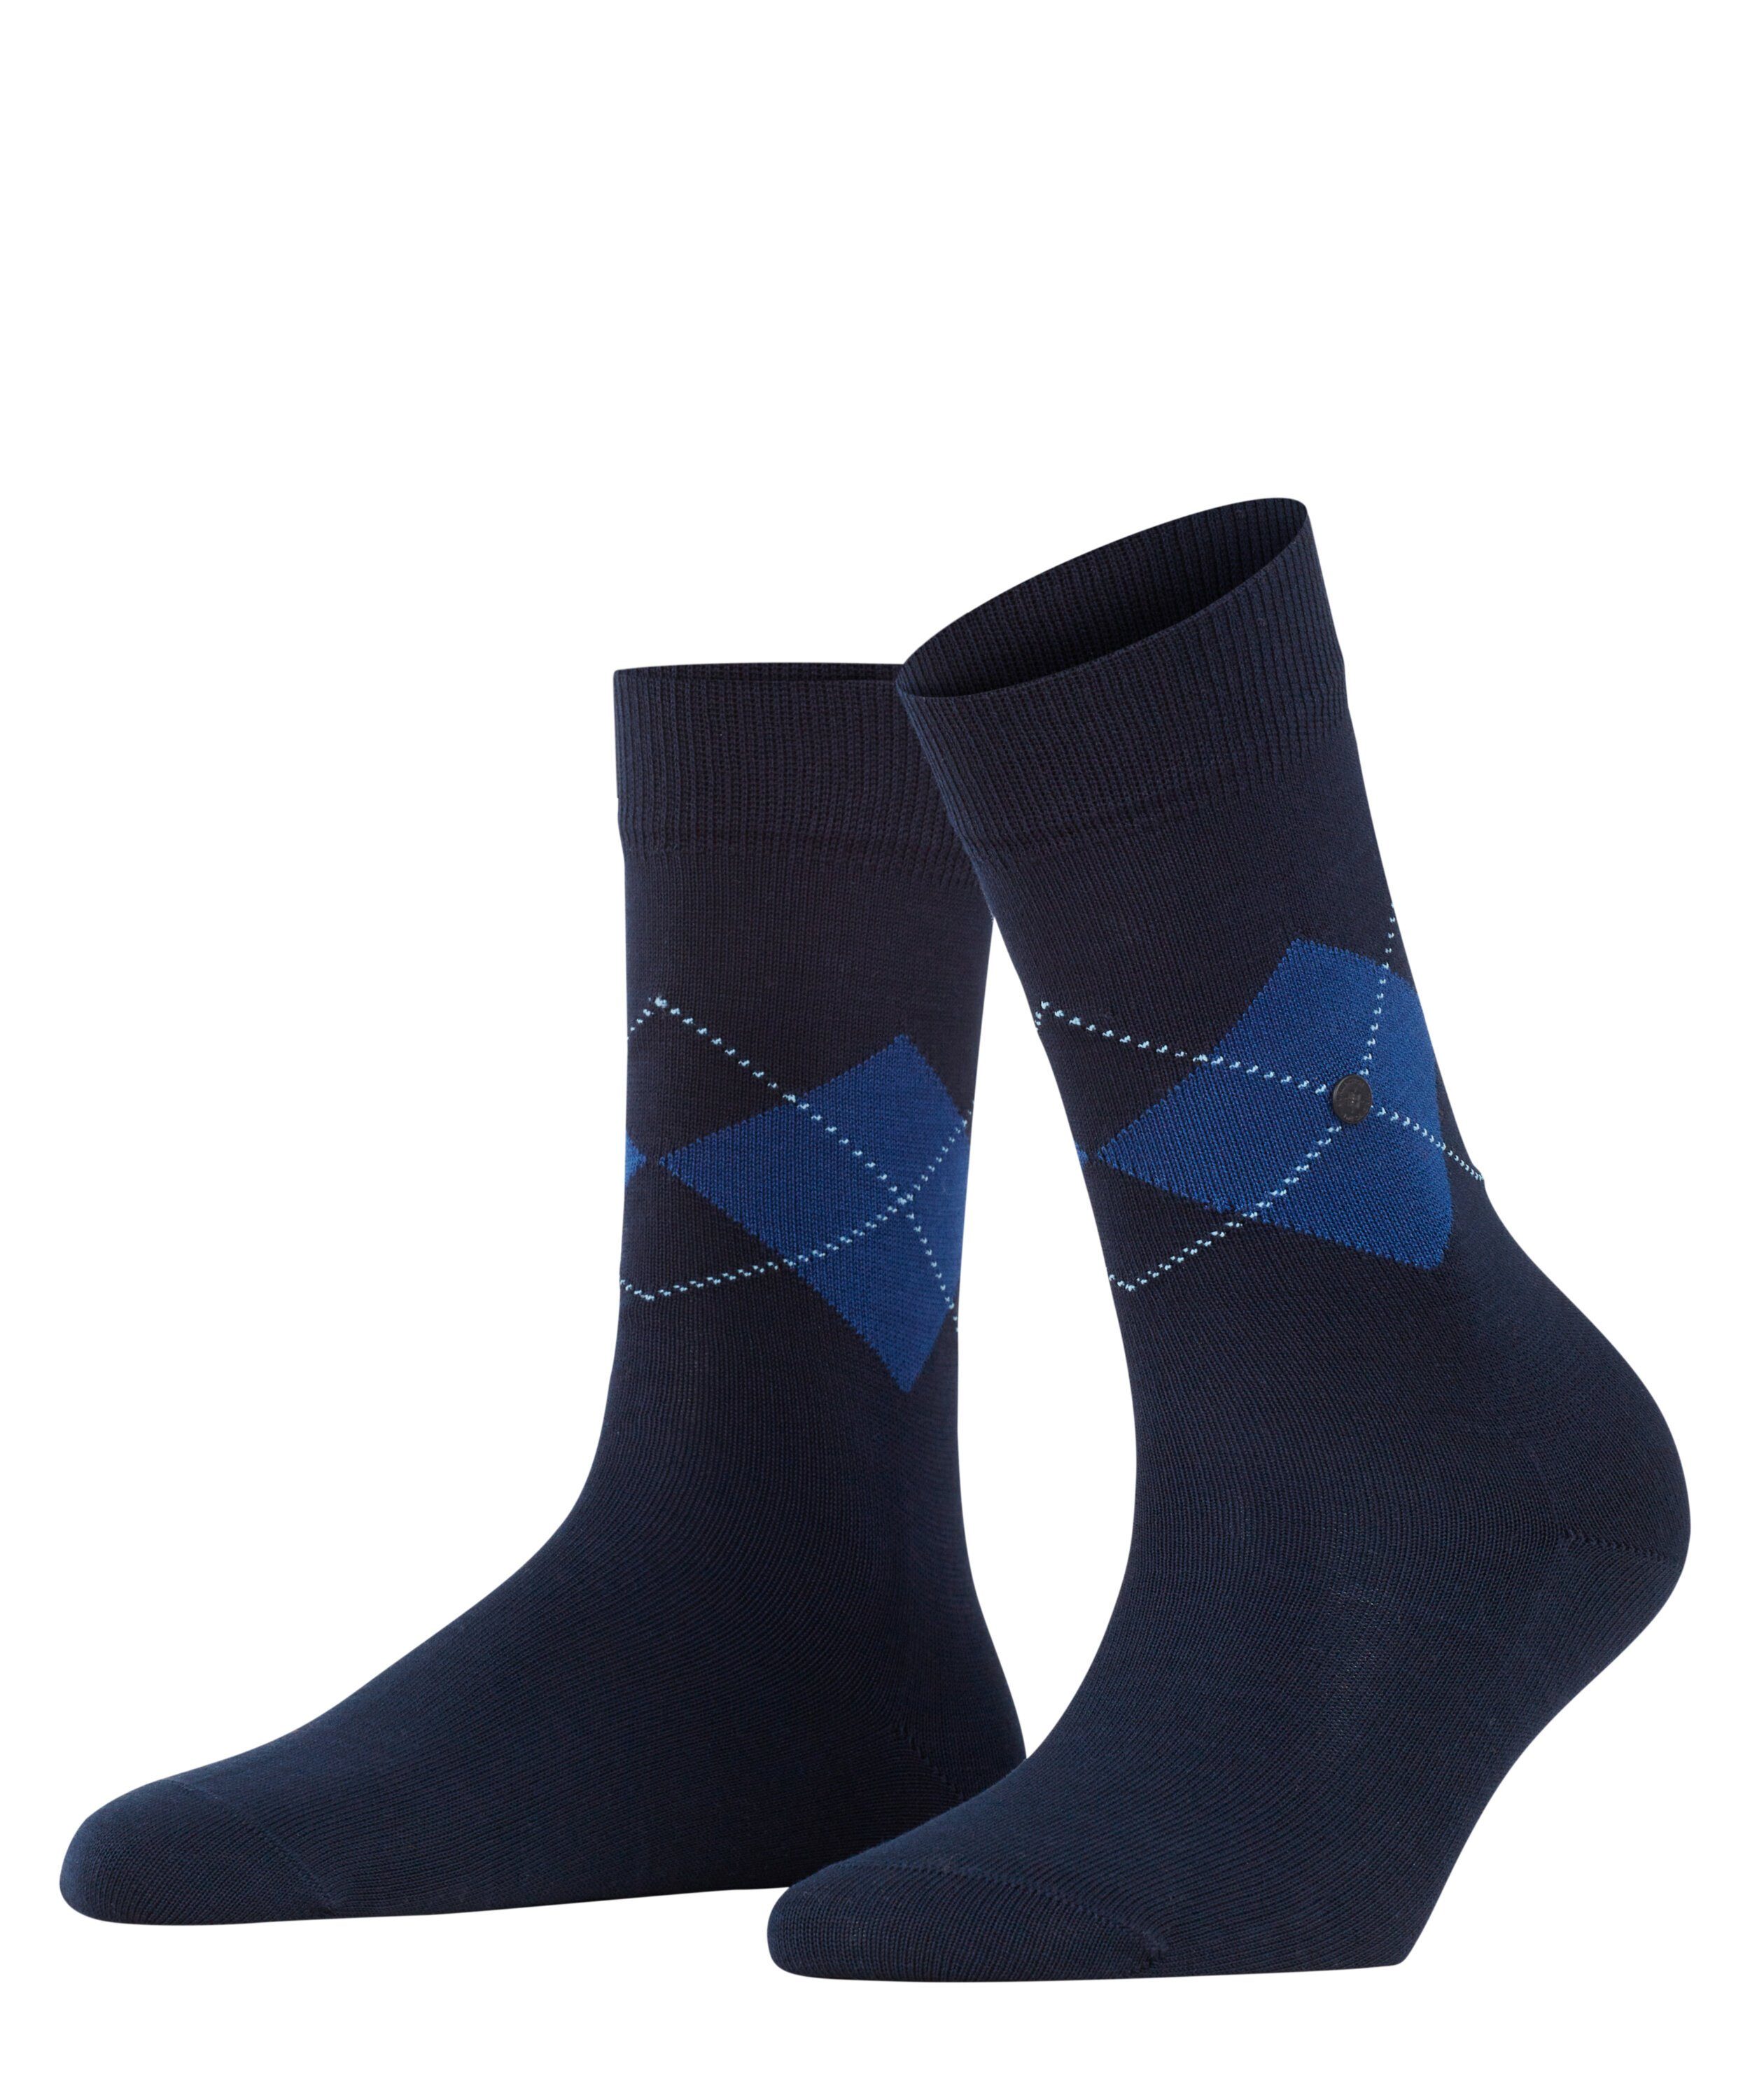 Burlington Socken online kaufen | OTTO